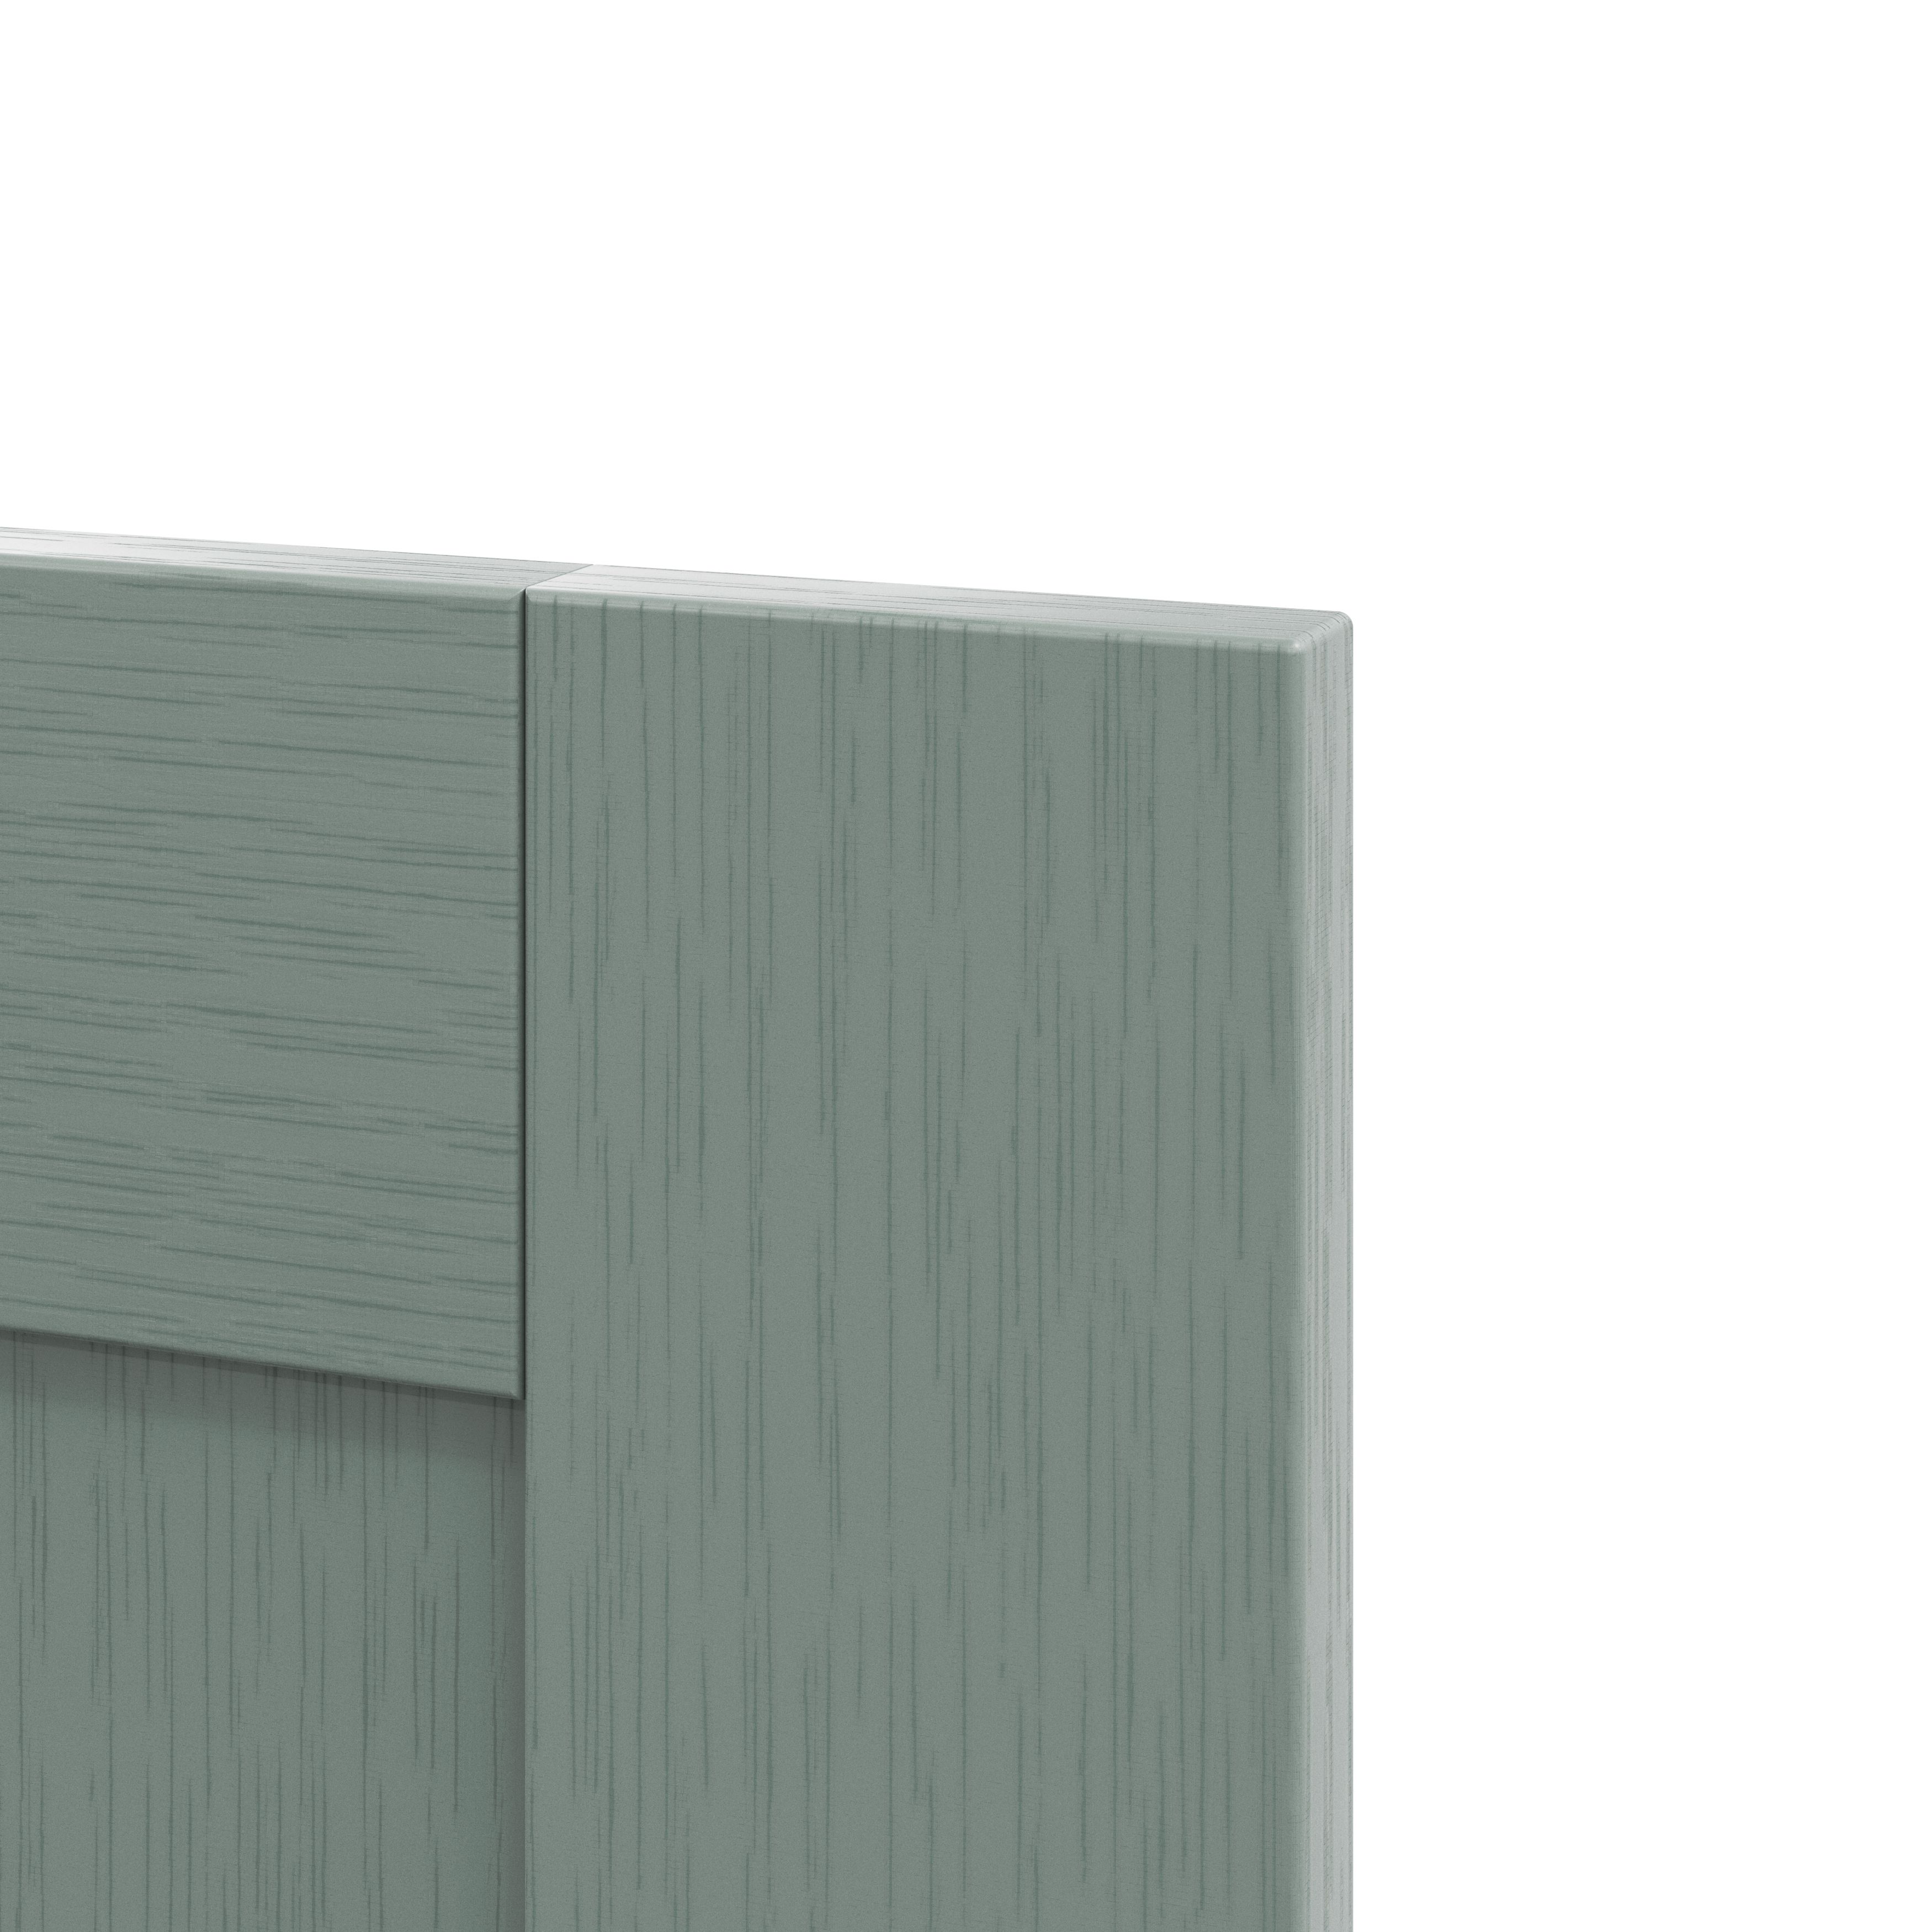 GoodHome Alpinia Matt Green Painted Wood Effect Shaker Appliance Cabinet door (W)600mm (H)687mm (T)18mm